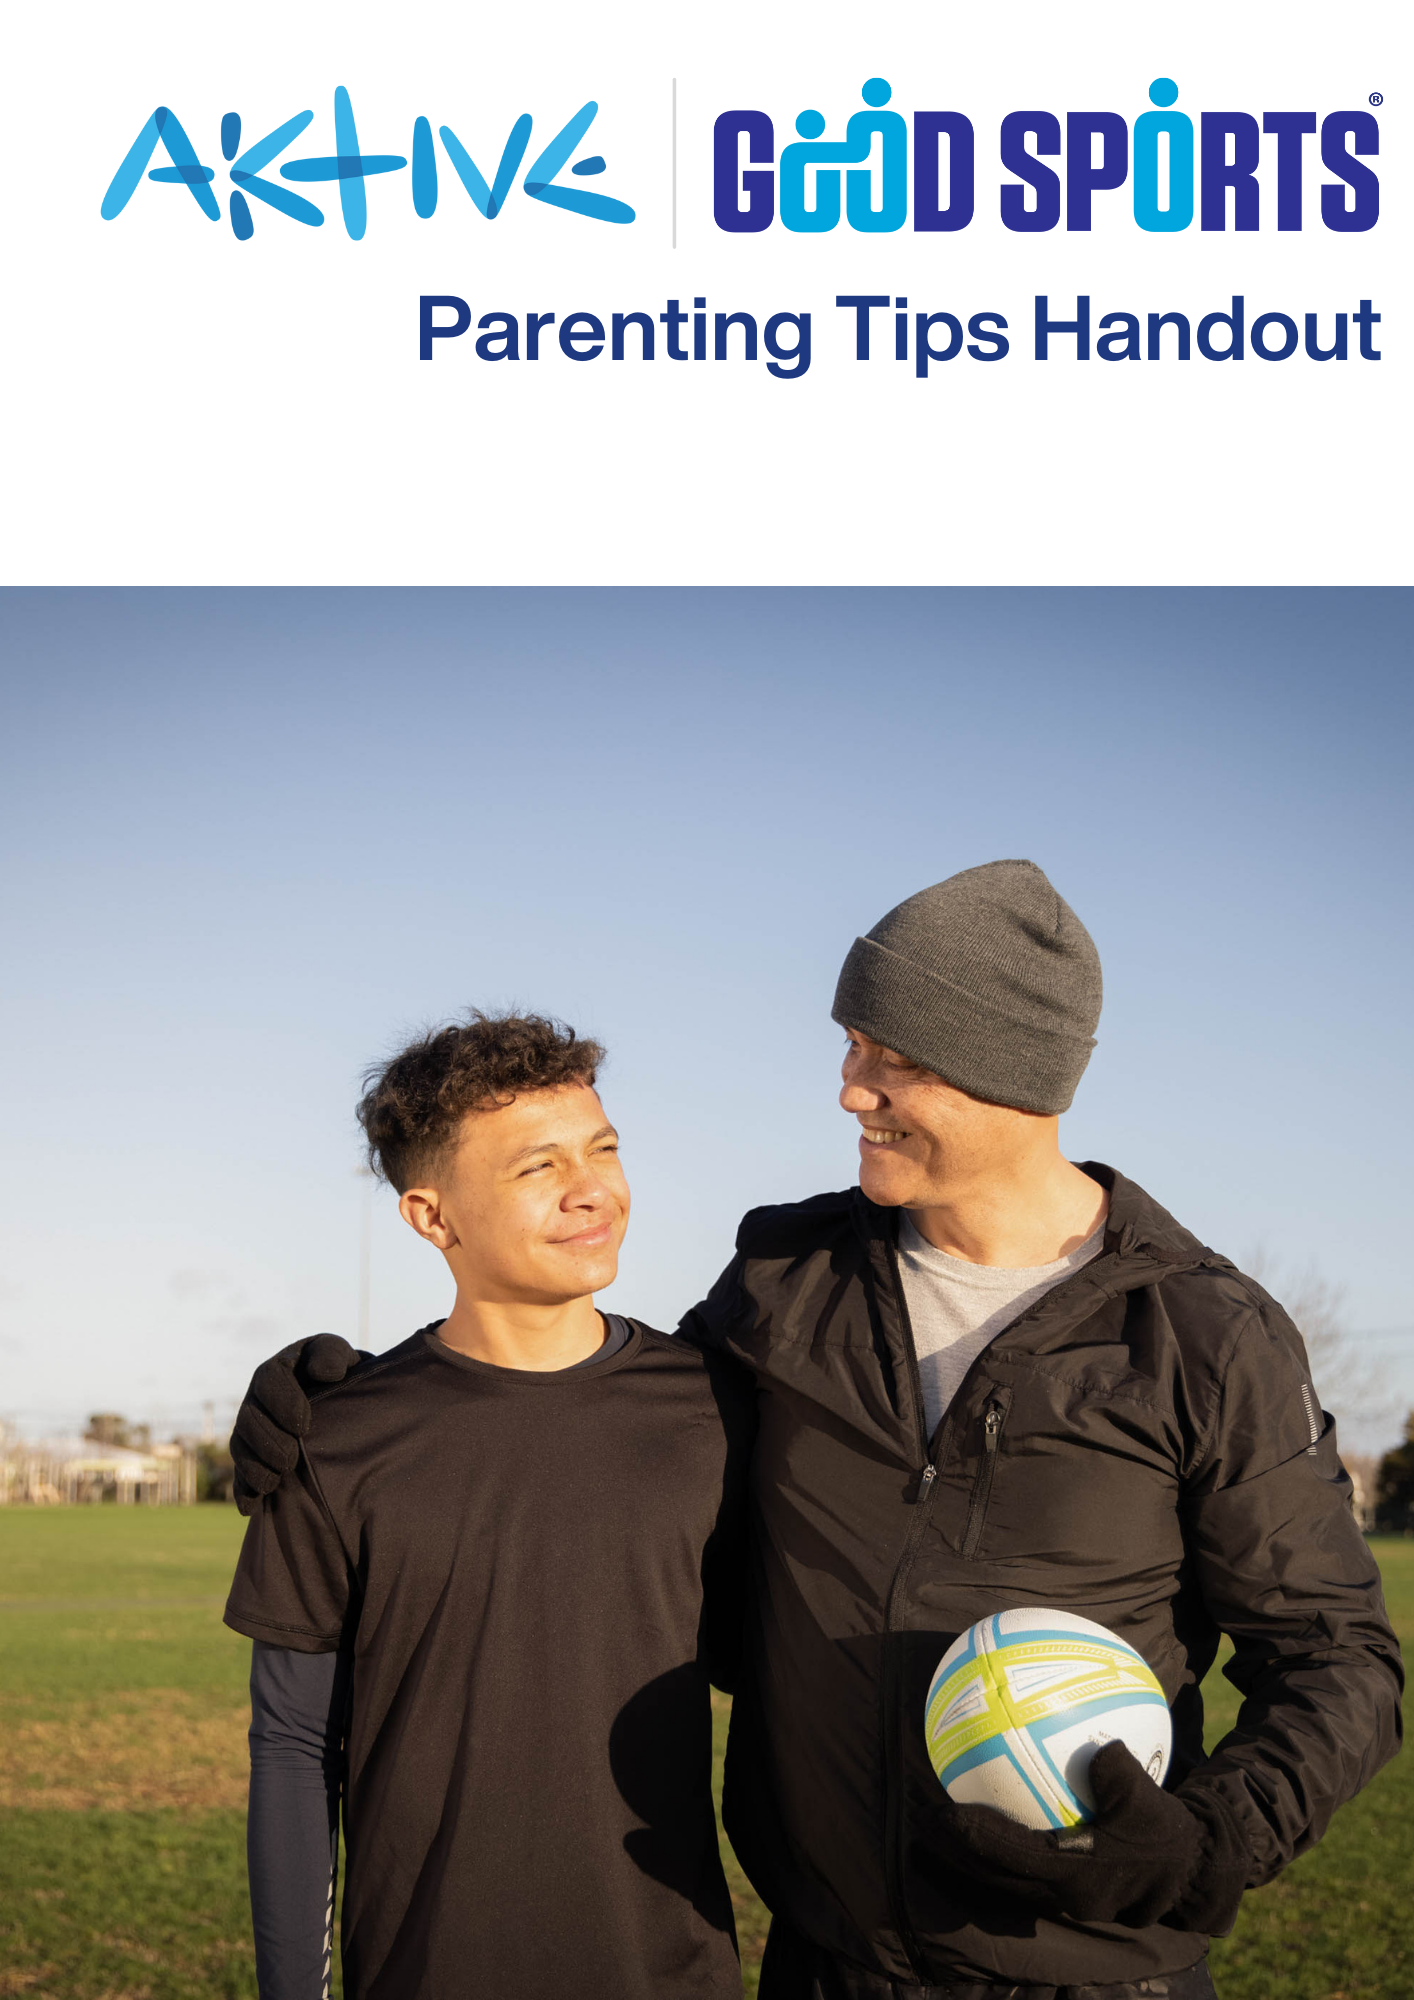 Good Sports Parenting Tips Handout